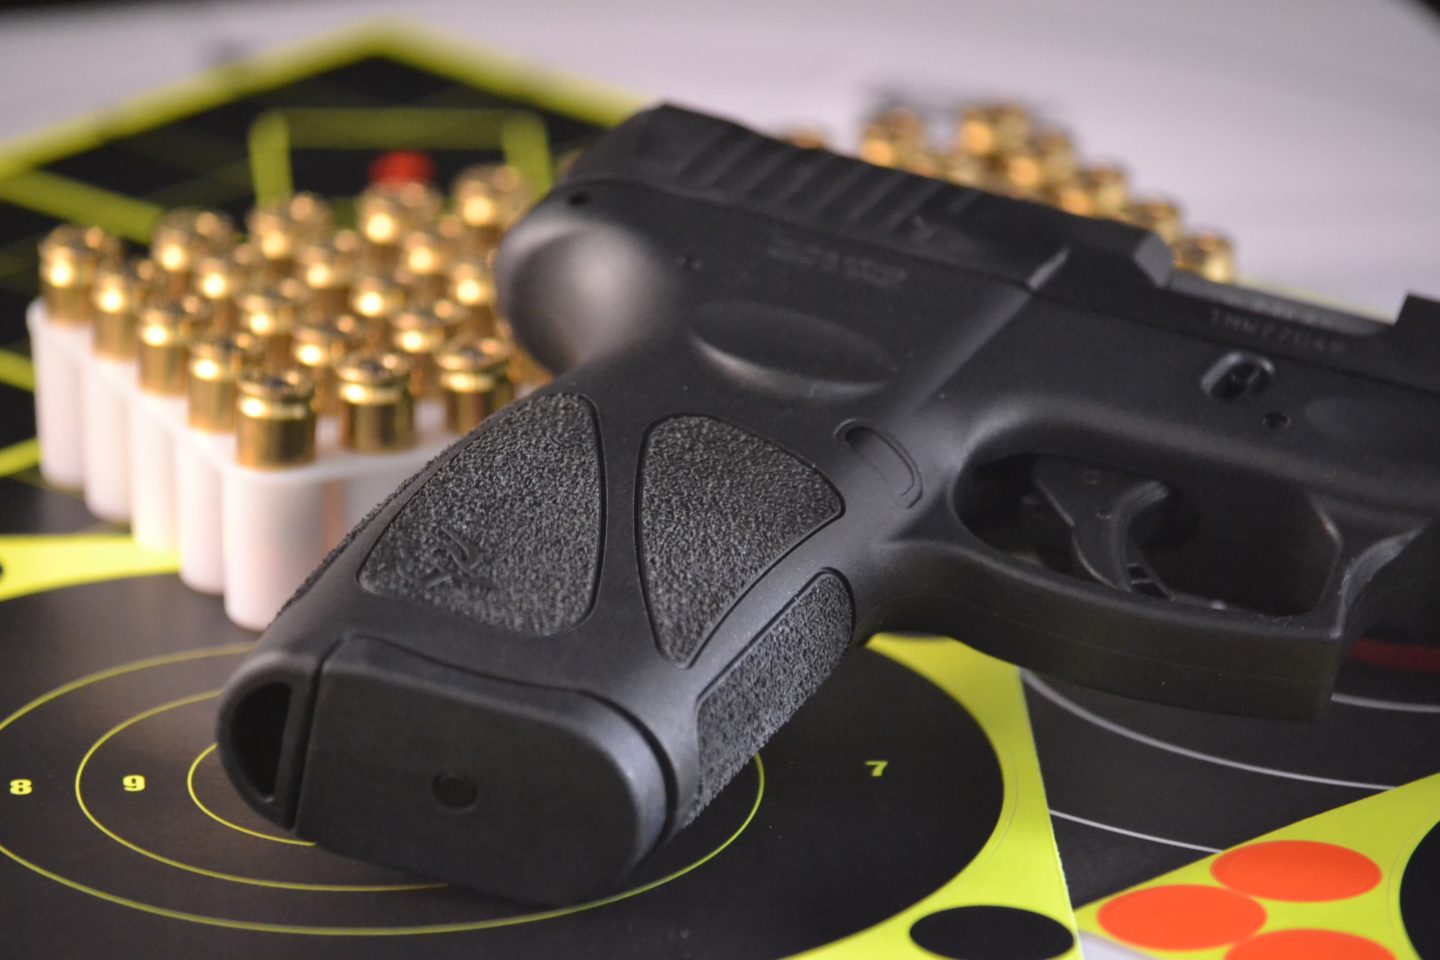 Essential Handgun Accessories All First-Time Gun Owners Need